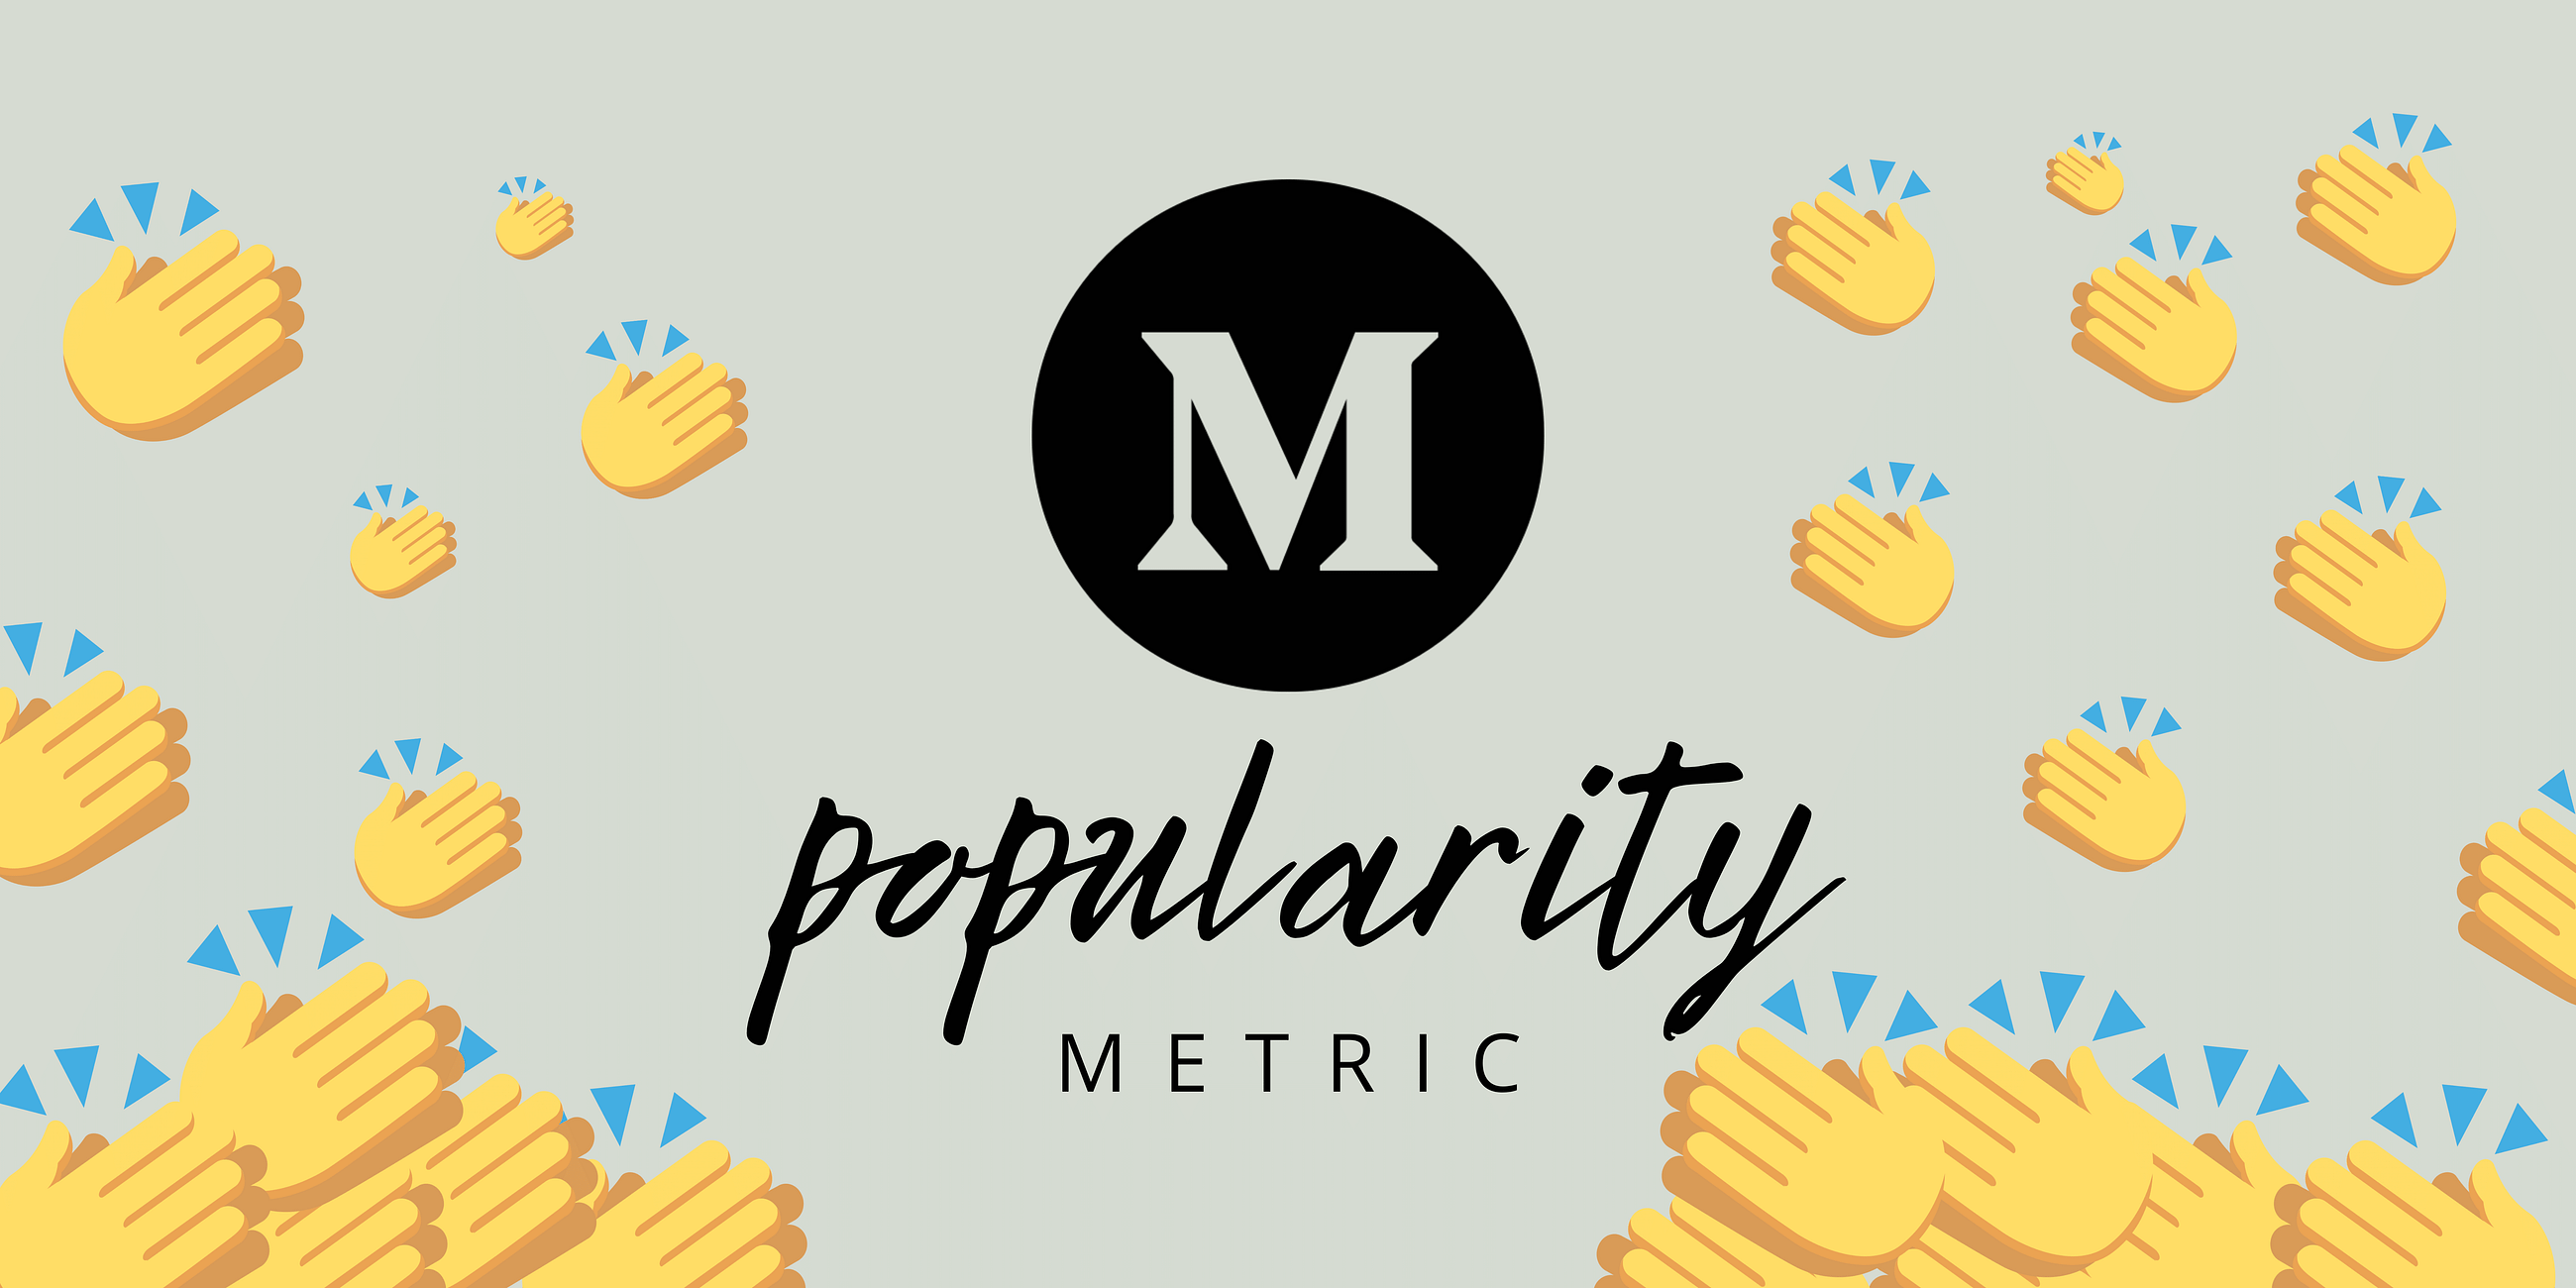 Best Metric to Judge a Medium Article’s Popularity